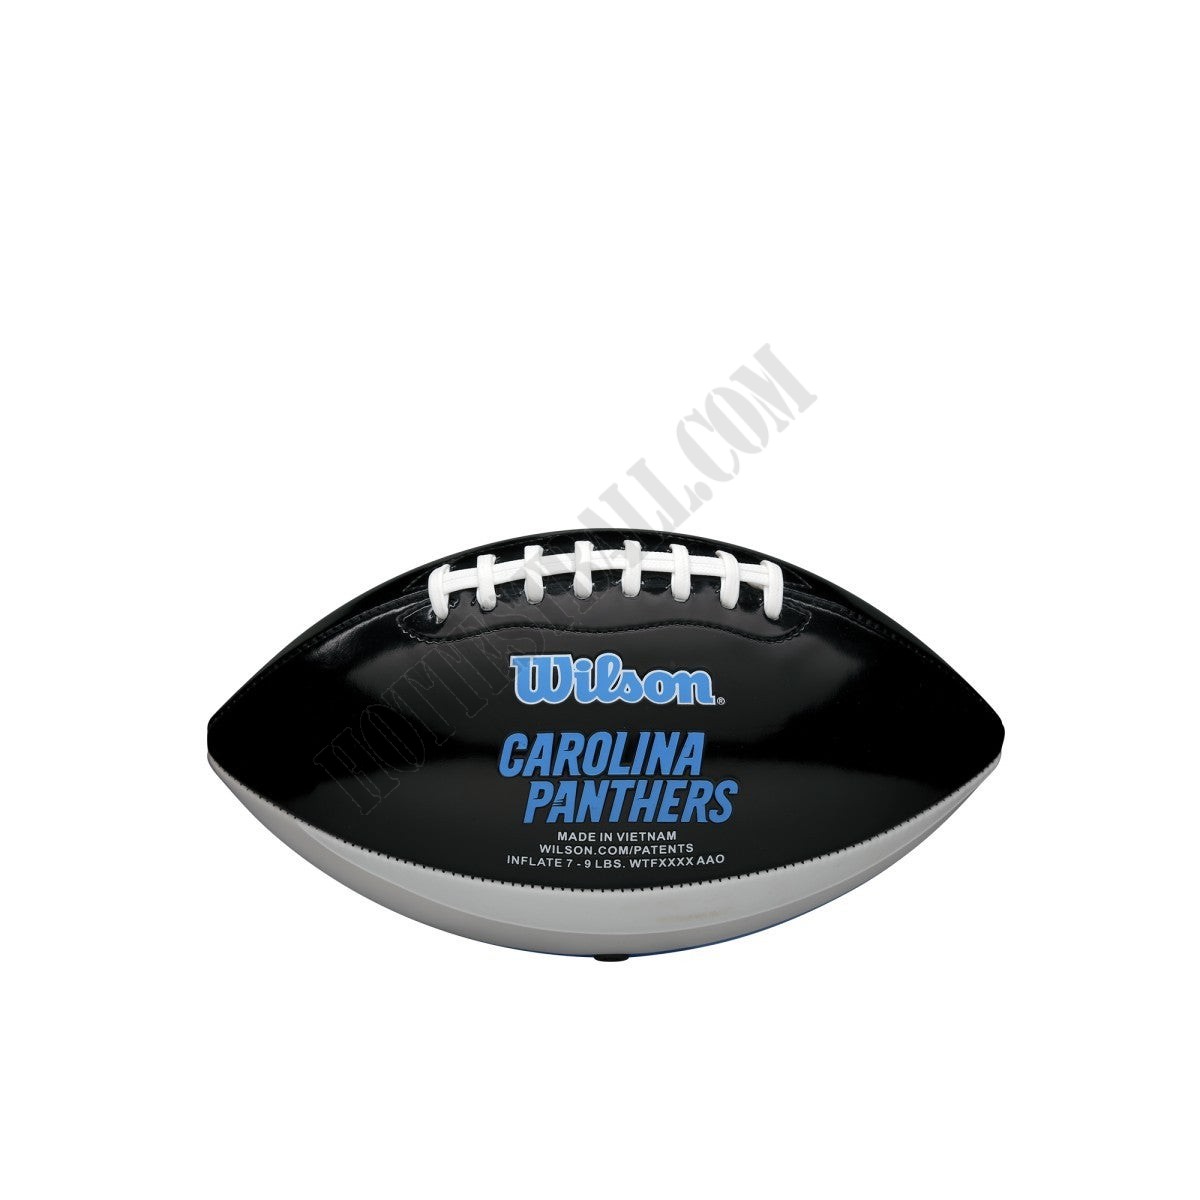 NFL City Pride Football - Carolina Panthers ● Wilson Promotions - -1